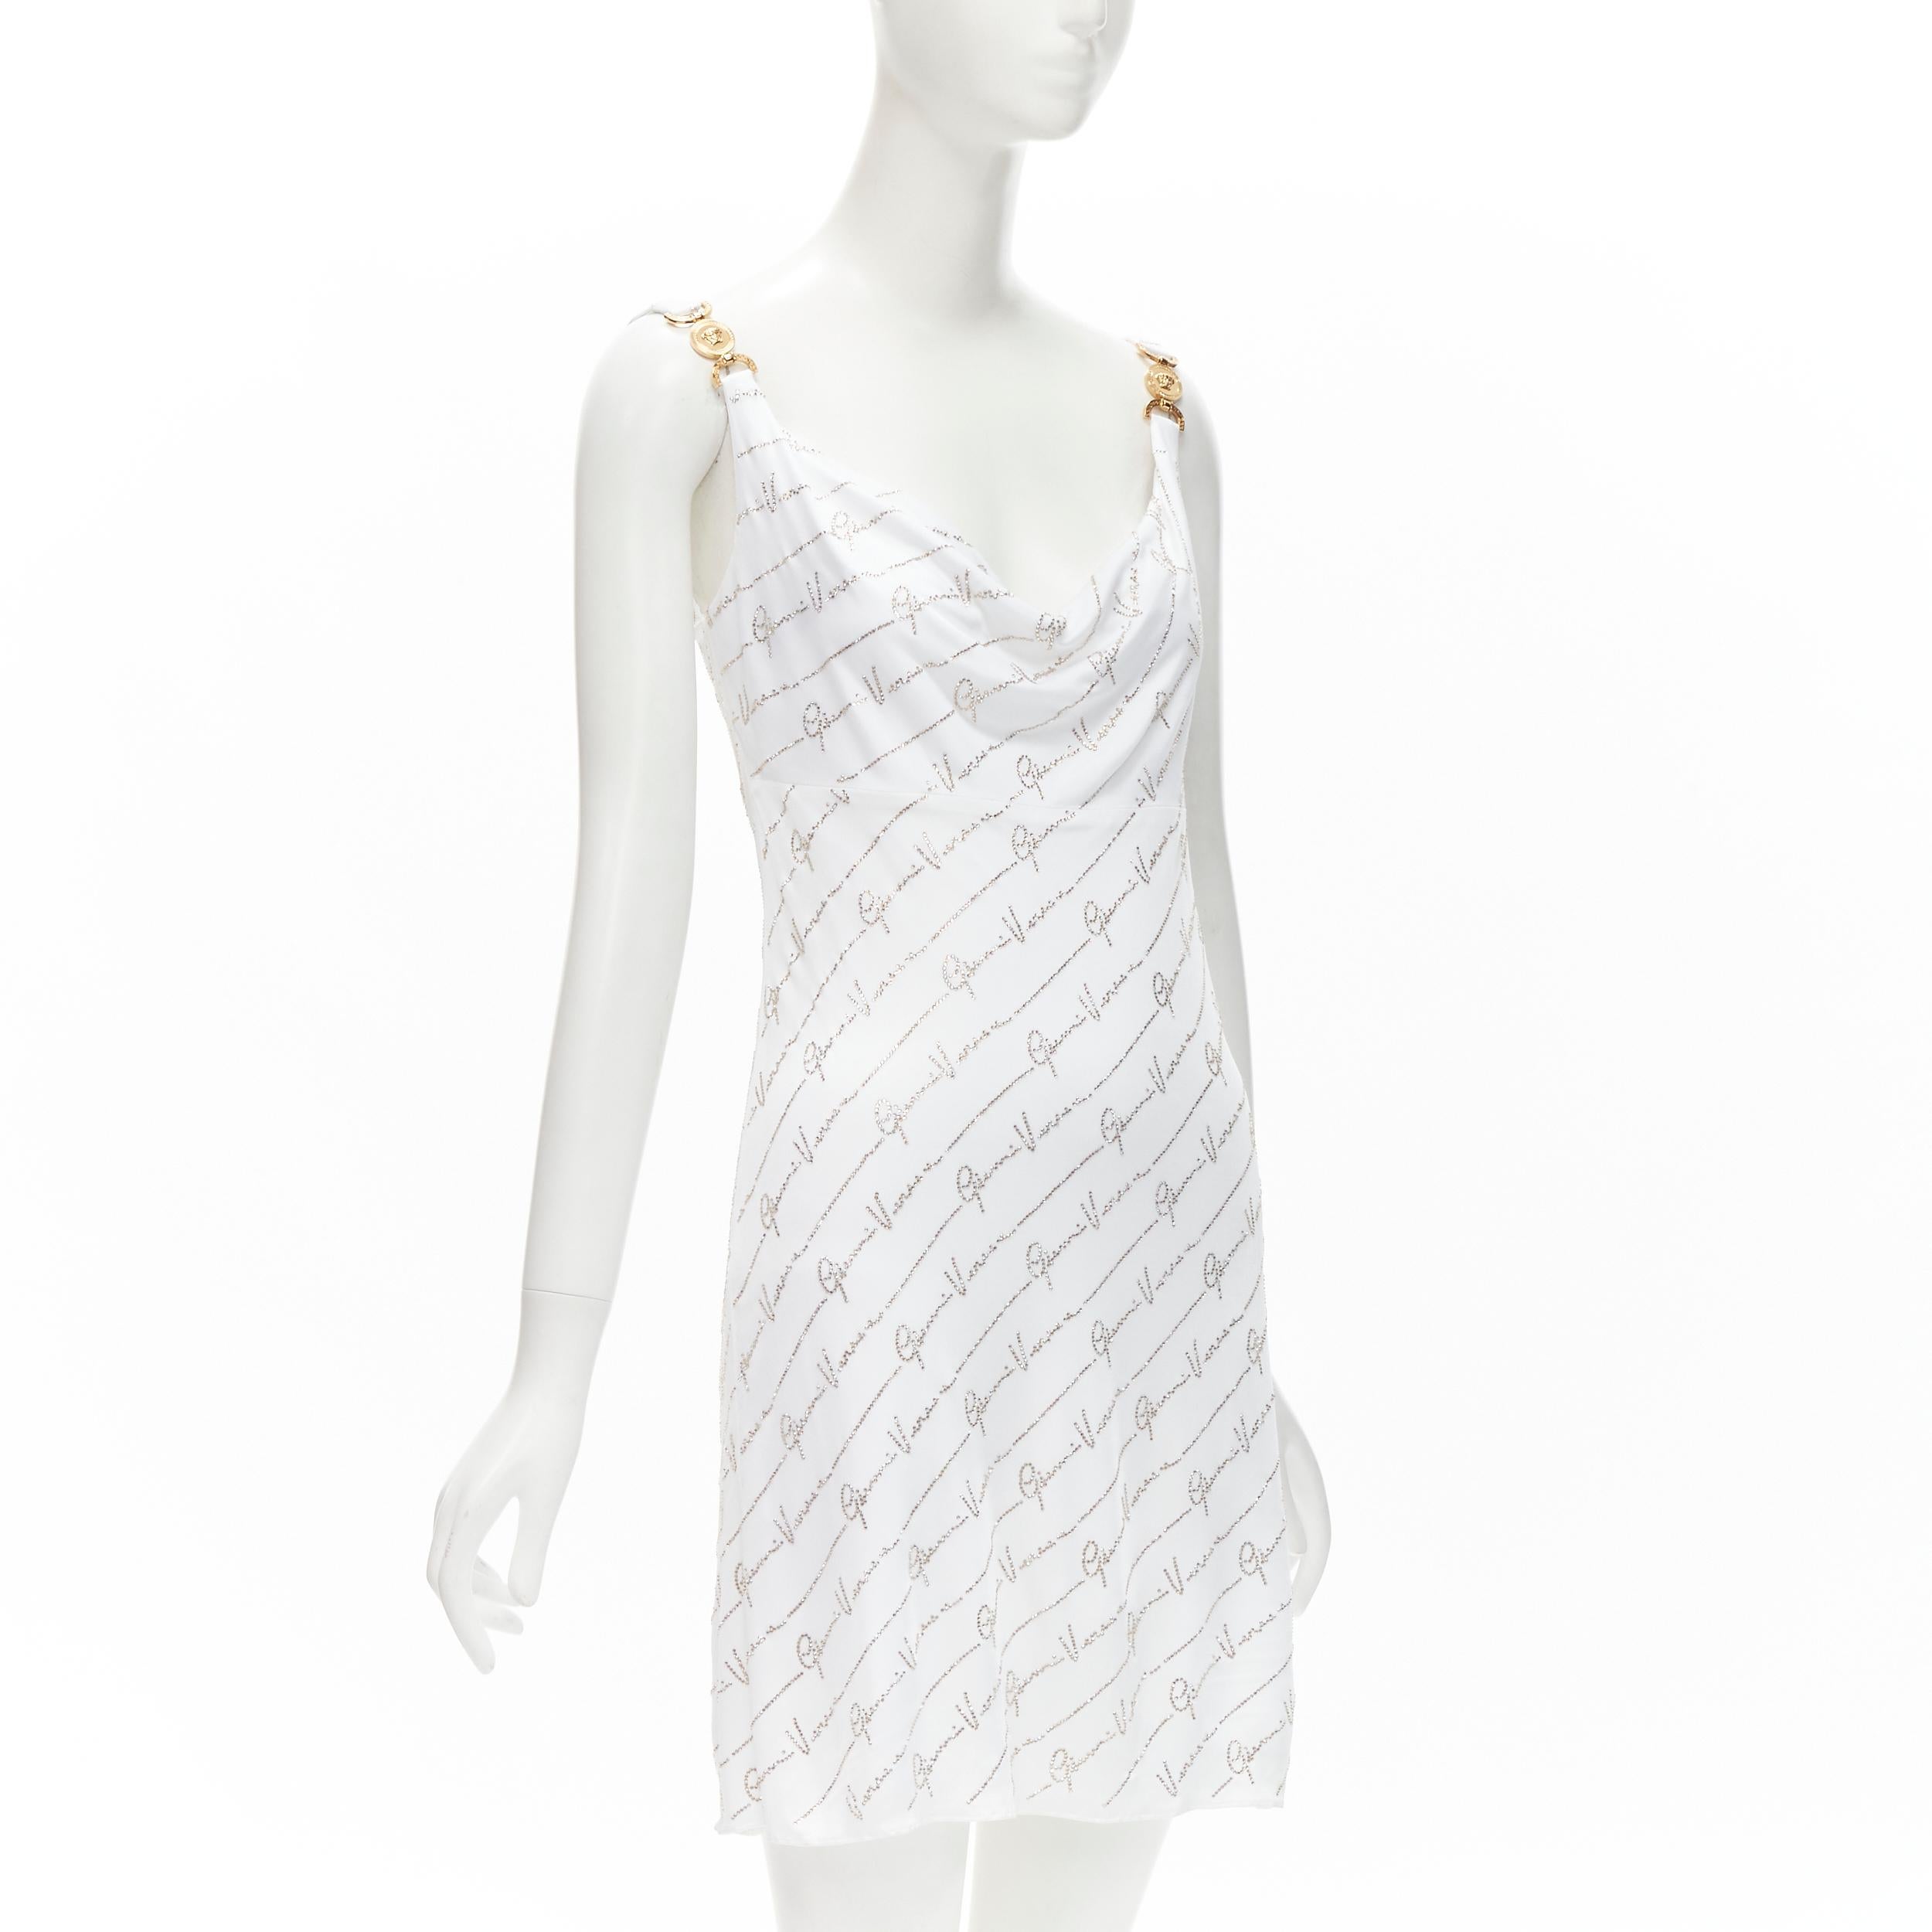 Gris Versace - Robe Medusa incrustée de cristaux blancs incrustés, signature Gianni, taille IT 44 L, état neuf en vente